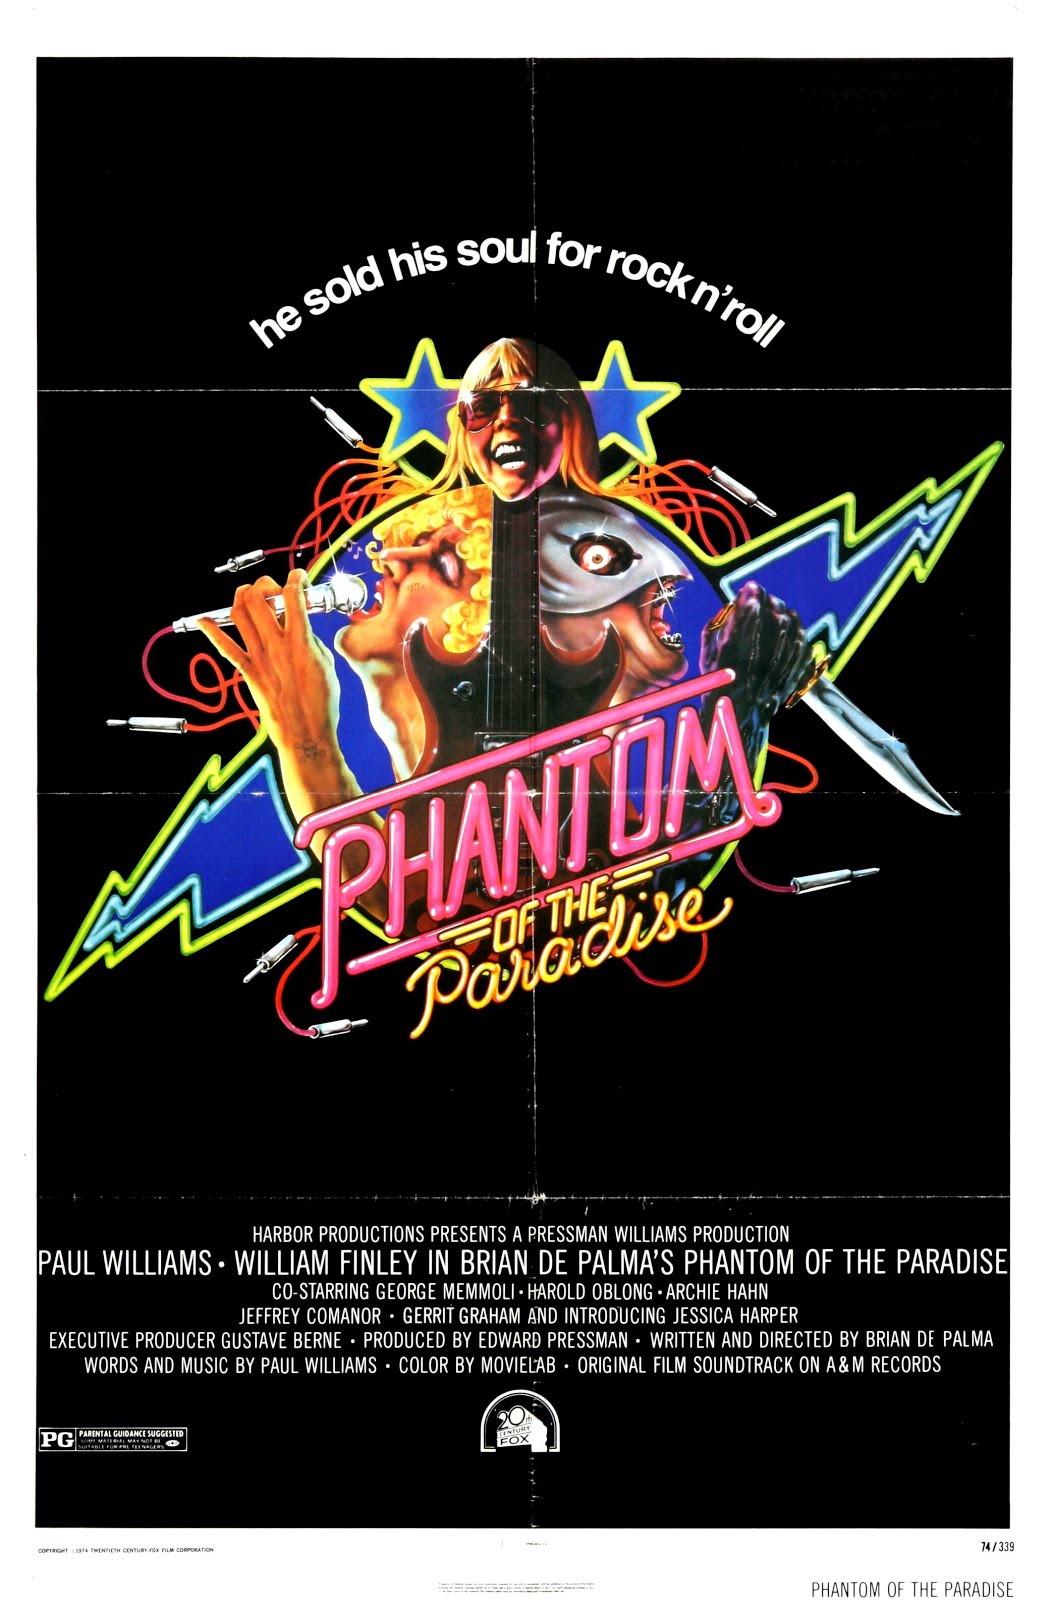 Phantom of the paradise (1973) Brian De Palma - Phantom of the paradise (26.11.1973 / 29.01.1974)